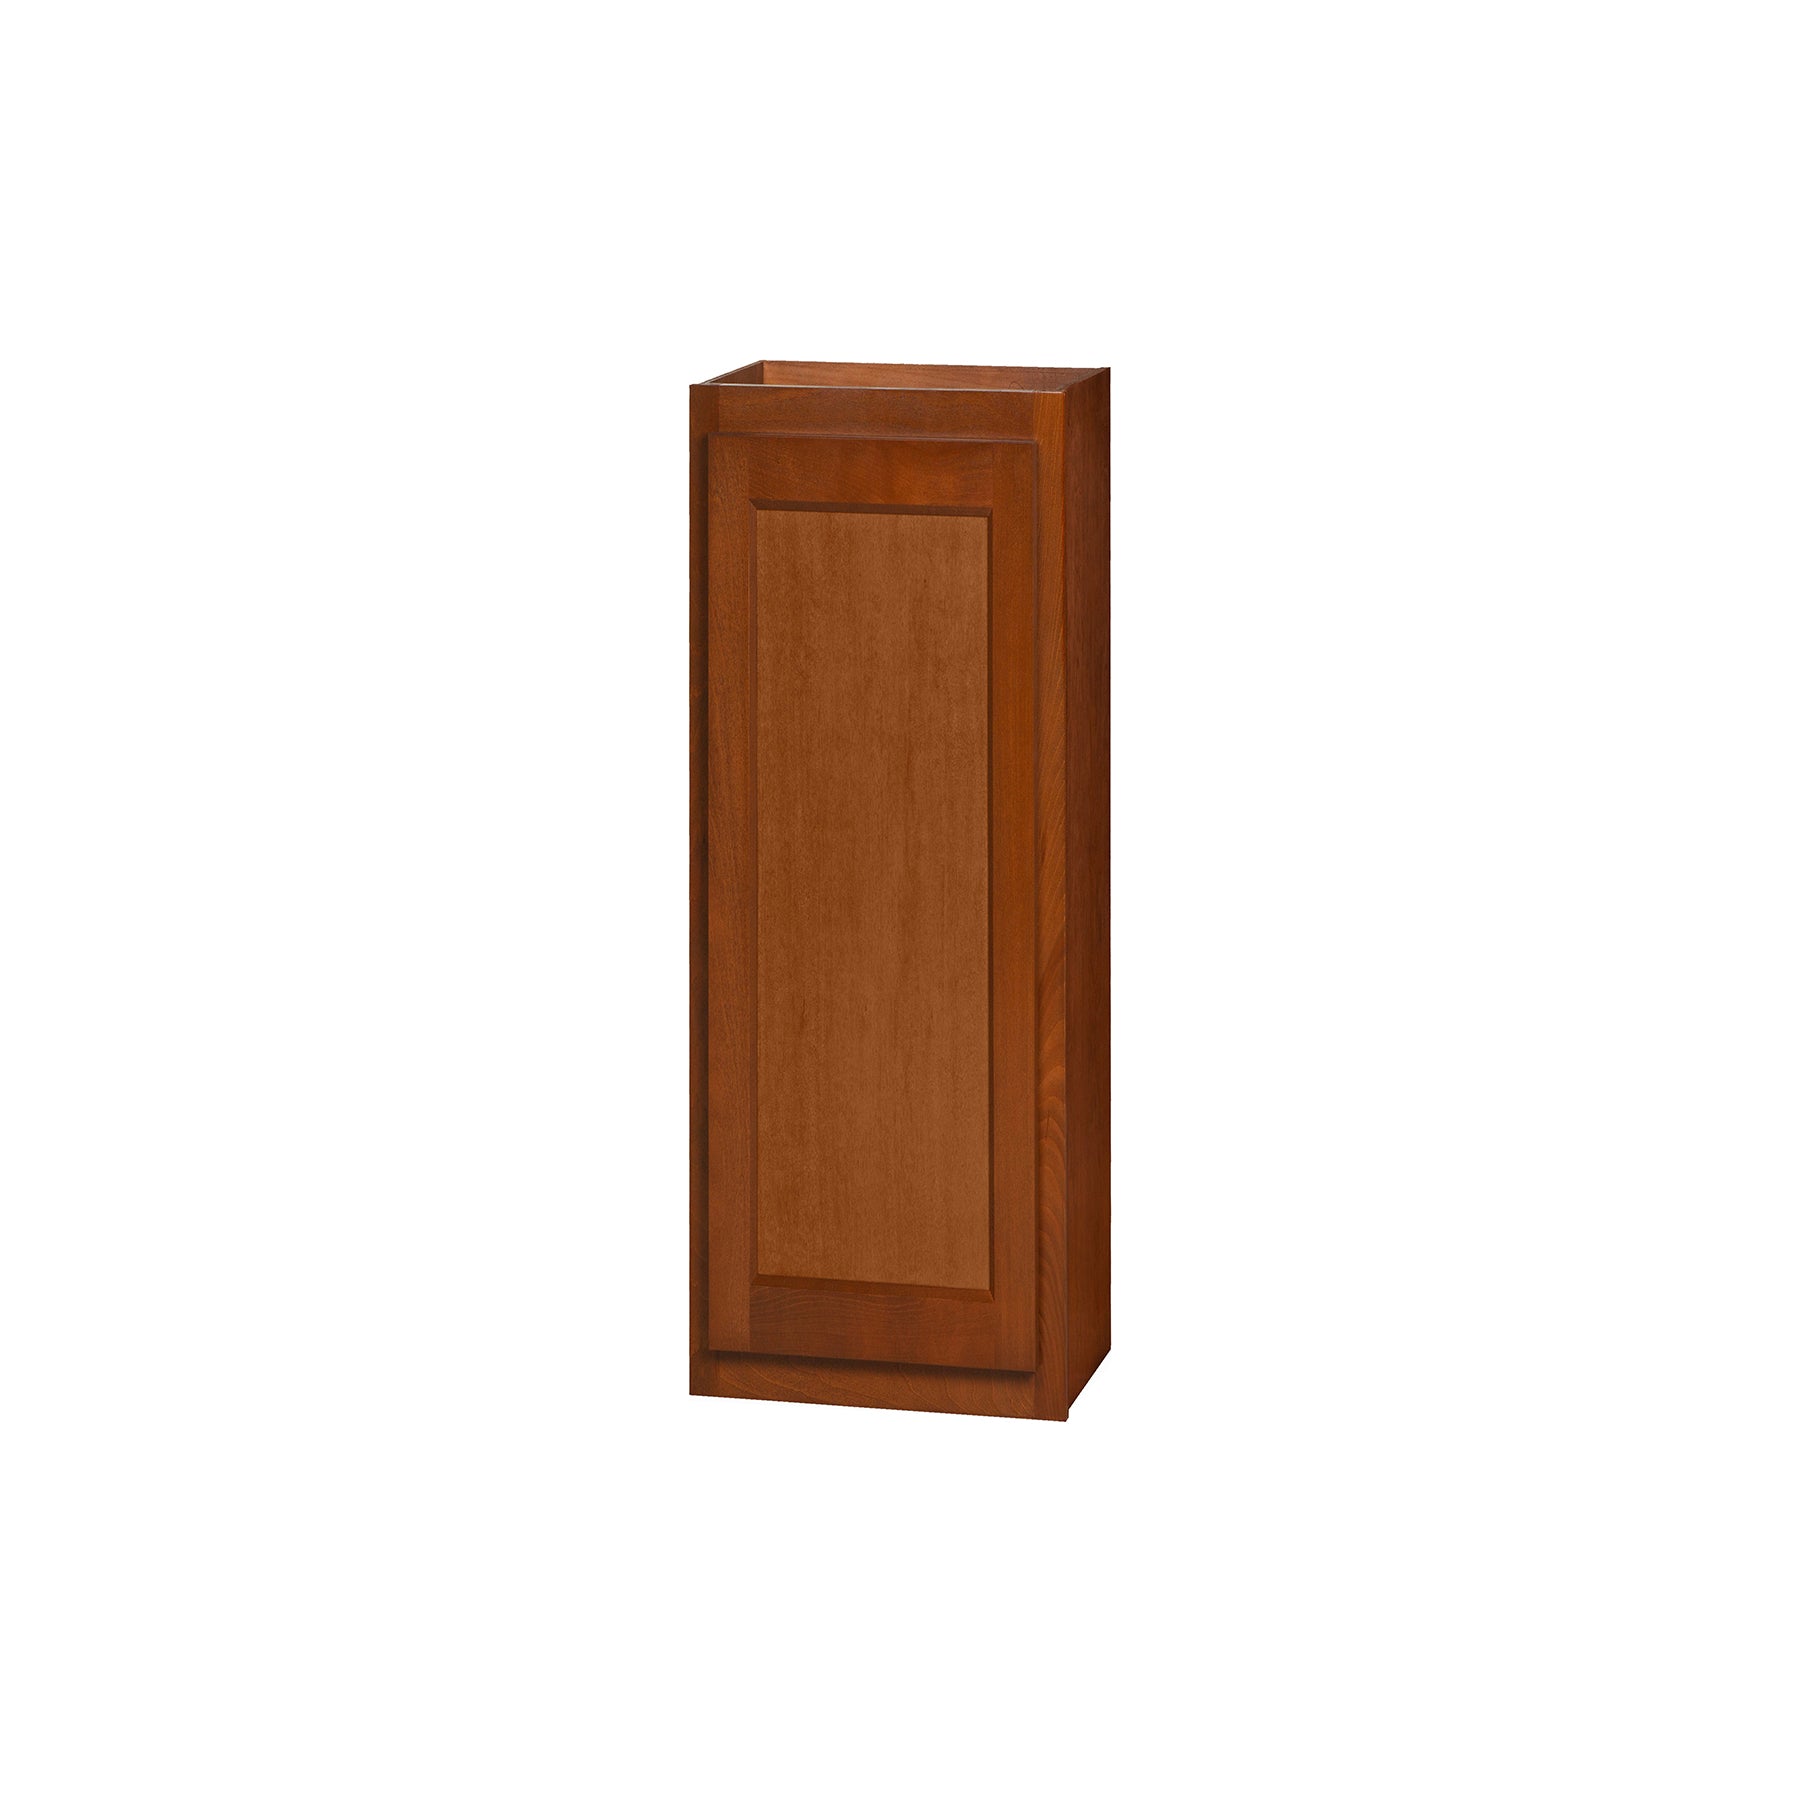 36 inch Wall Cabinets - Glenwood Shaker - 15 Inch W x 36 Inch H x 12 Inch D